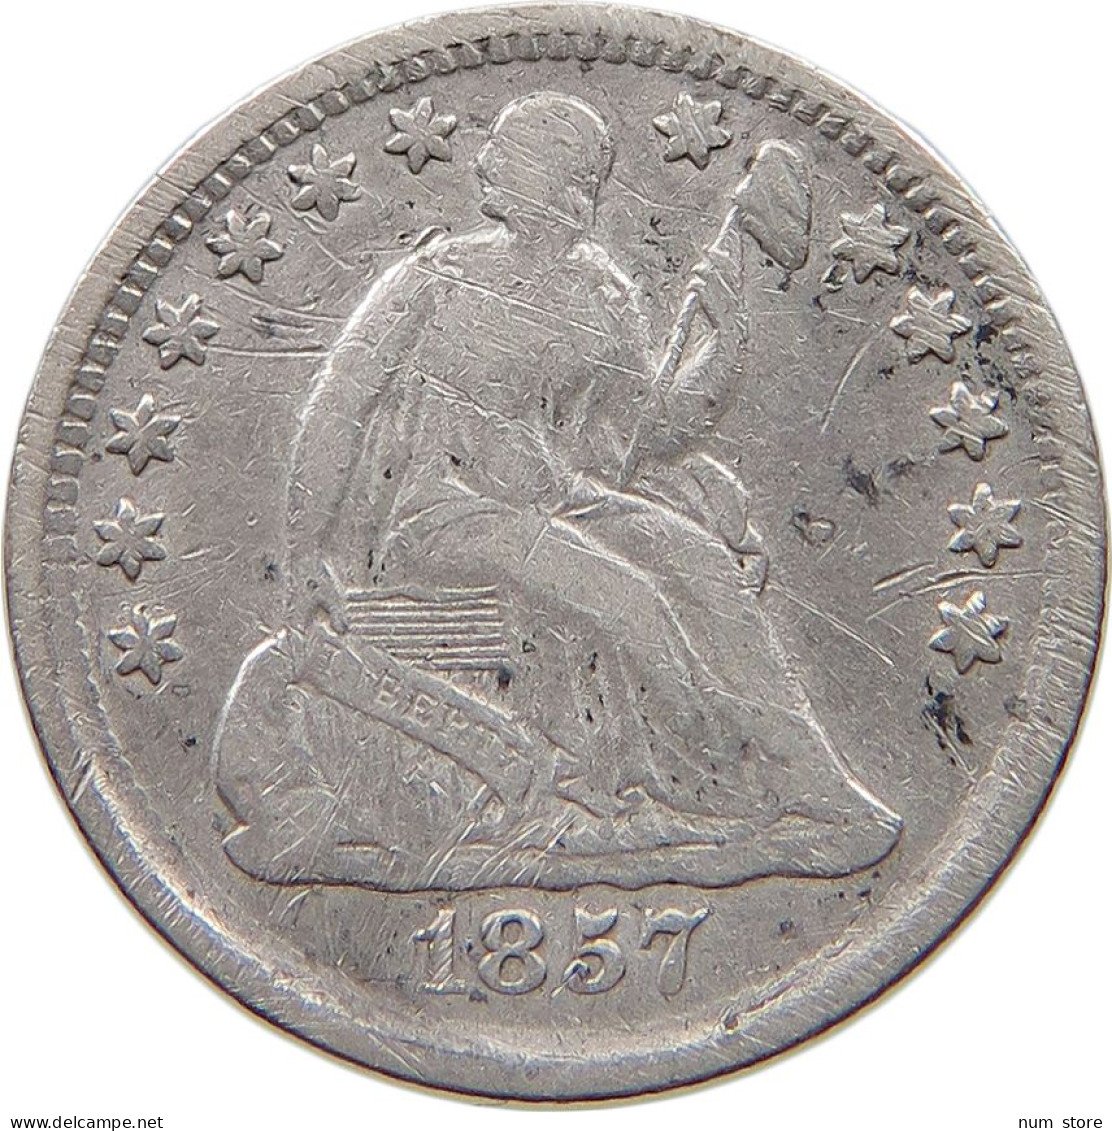 UNITED STATES OF AMERICA HALF DIME 1857 SEATED LIBERTY #t121 0323 - Half Dimes (Demi Dimes)